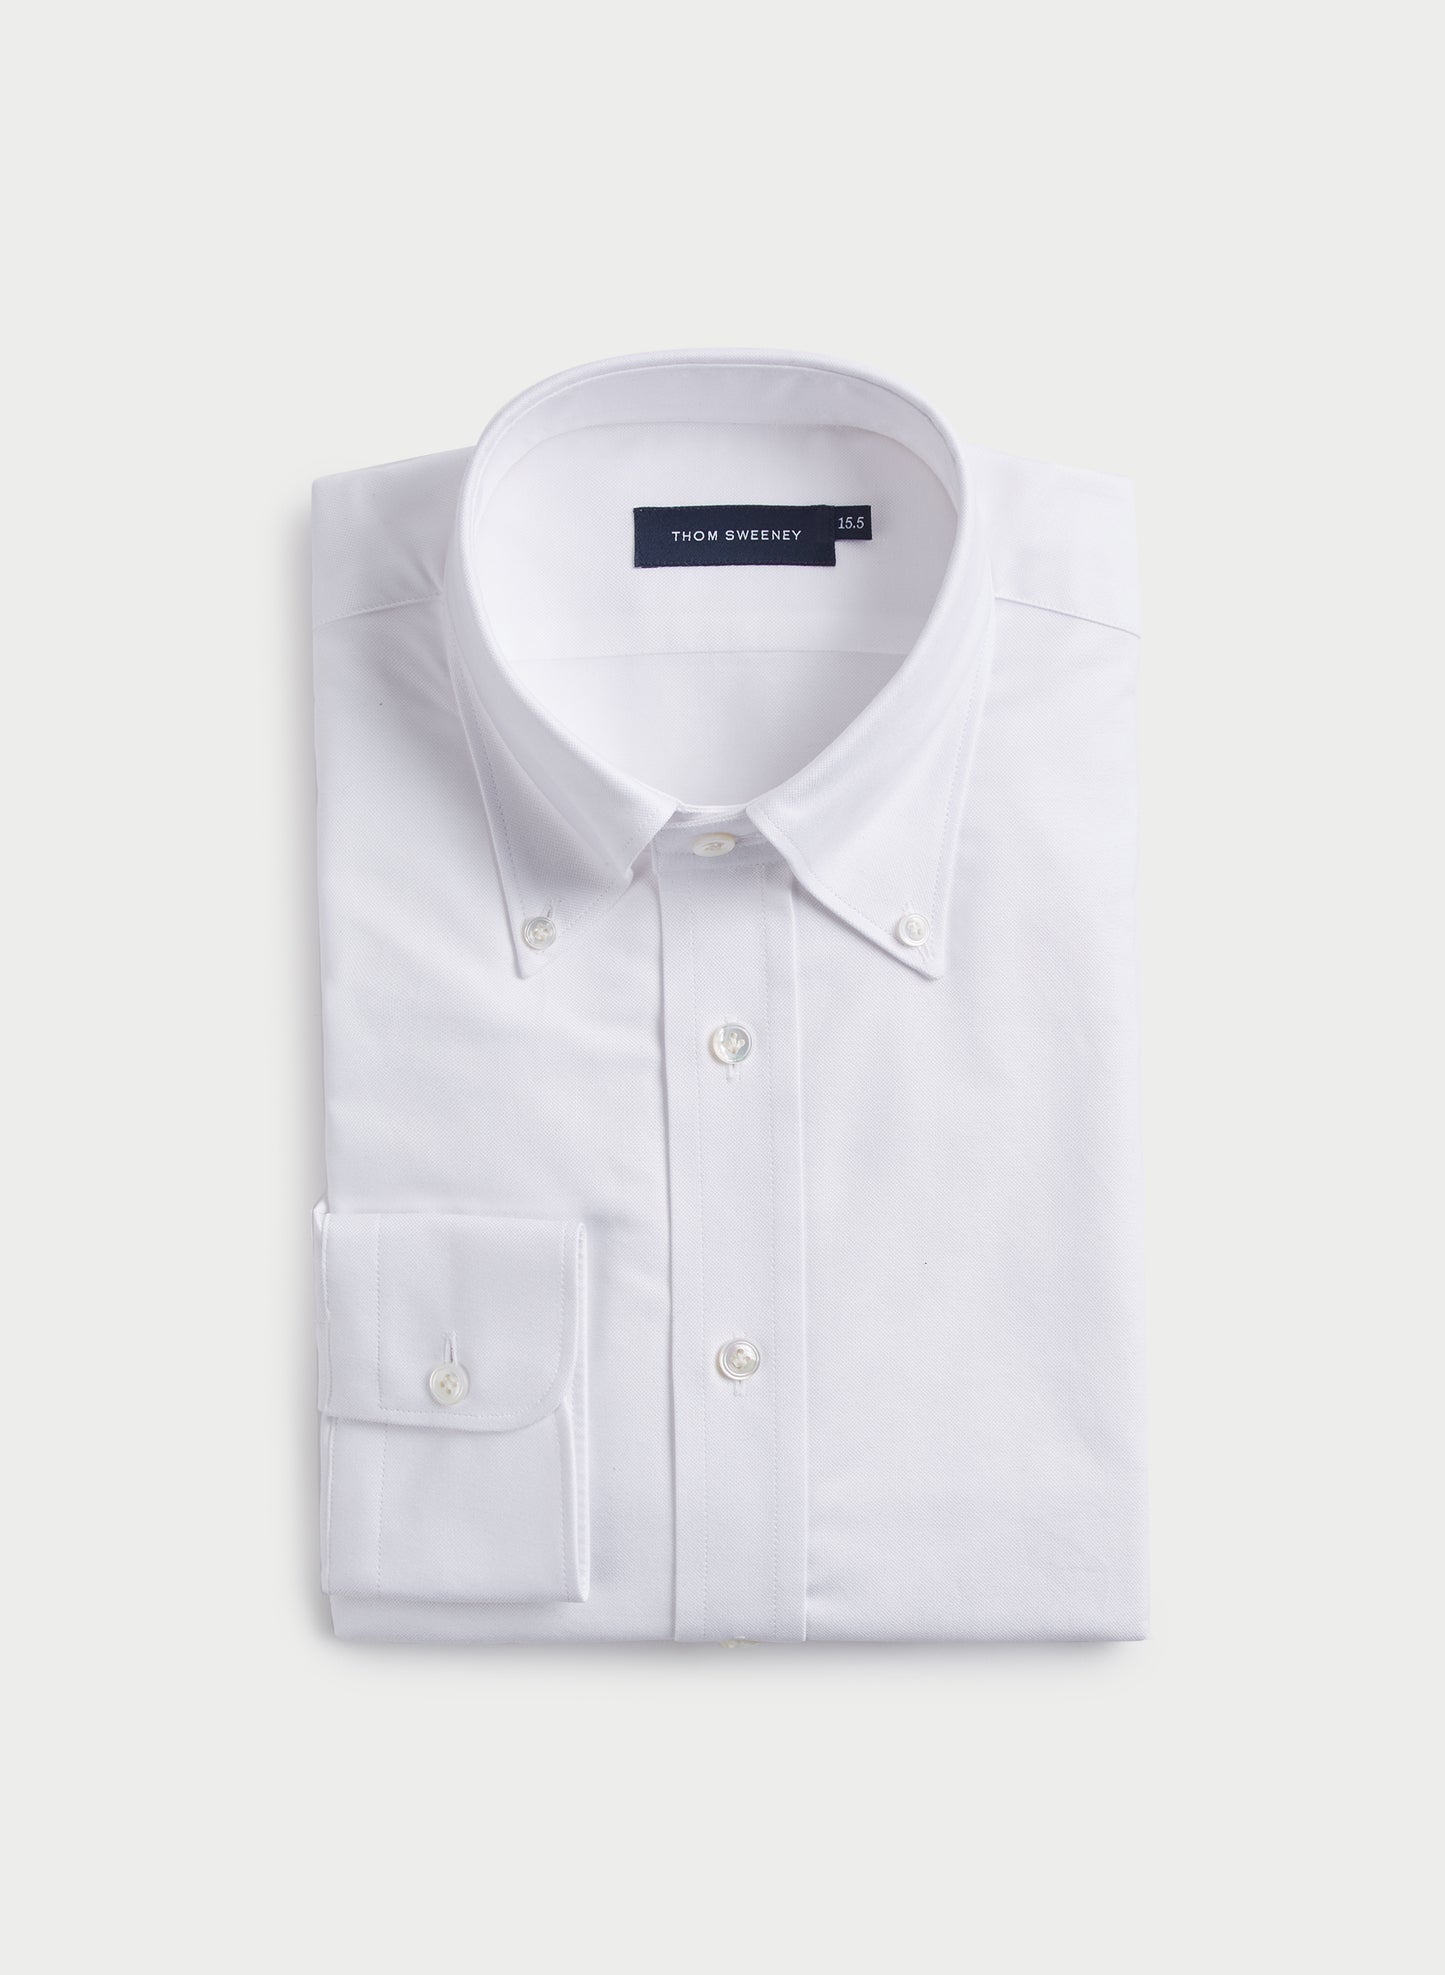 Cotton Casual Button Down Oxford Shirt